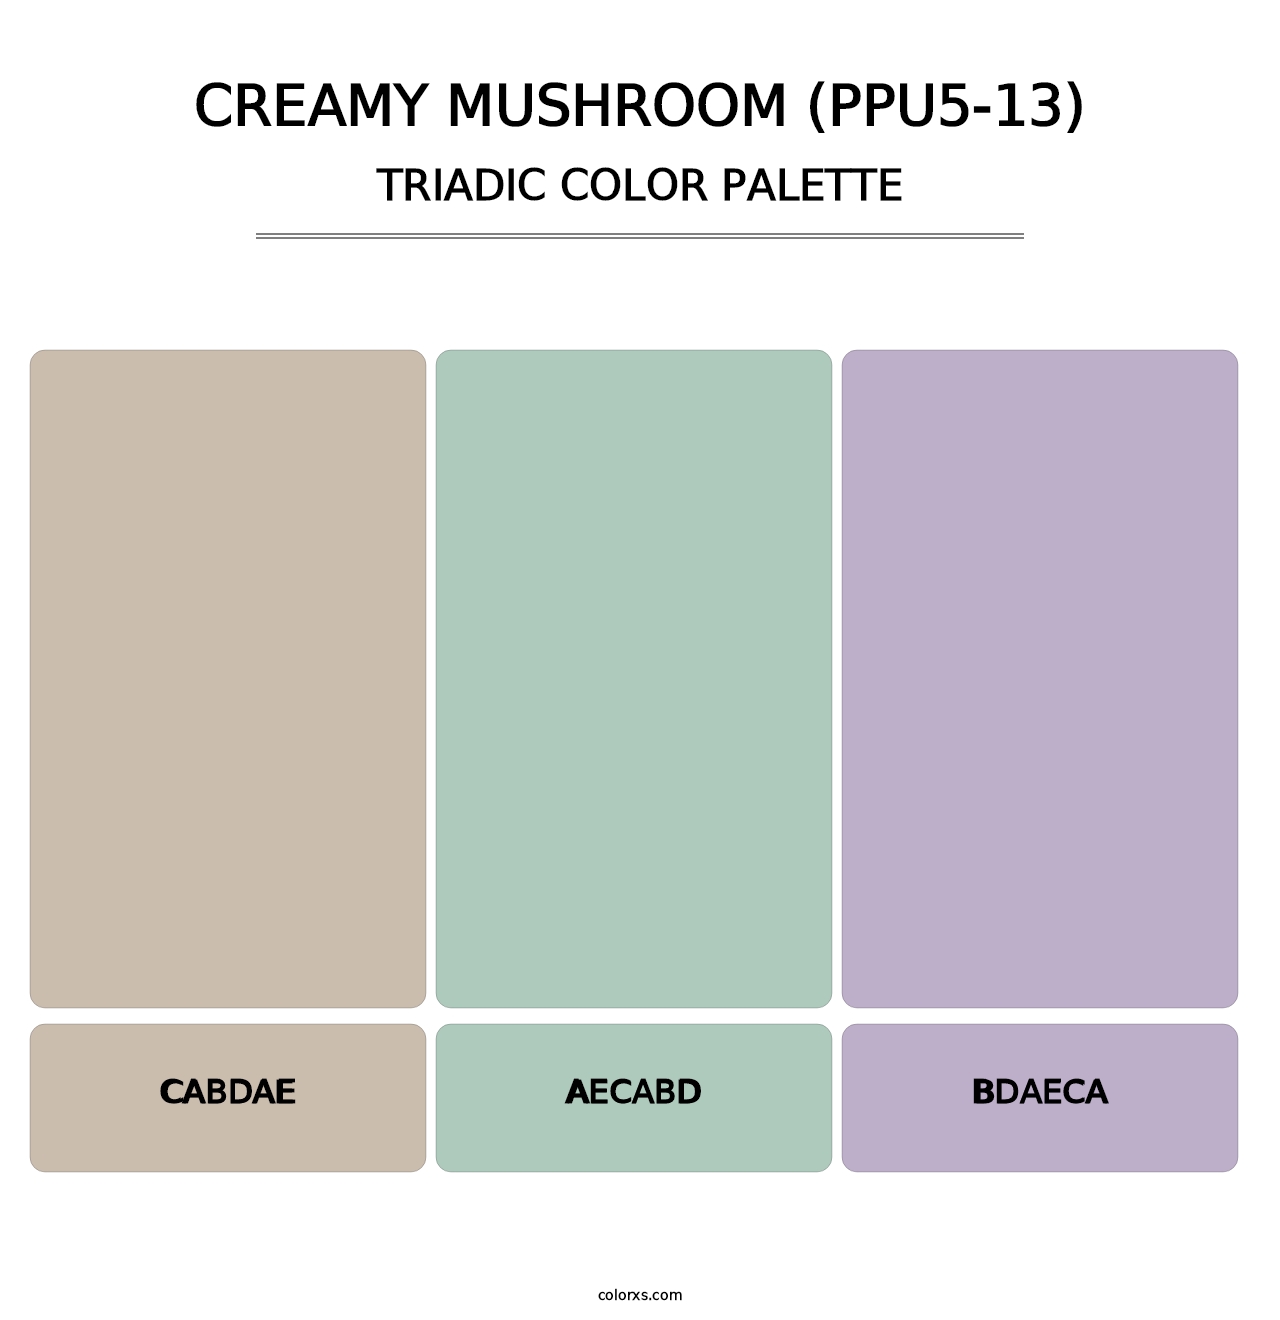 Creamy Mushroom (PPU5-13) - Triadic Color Palette